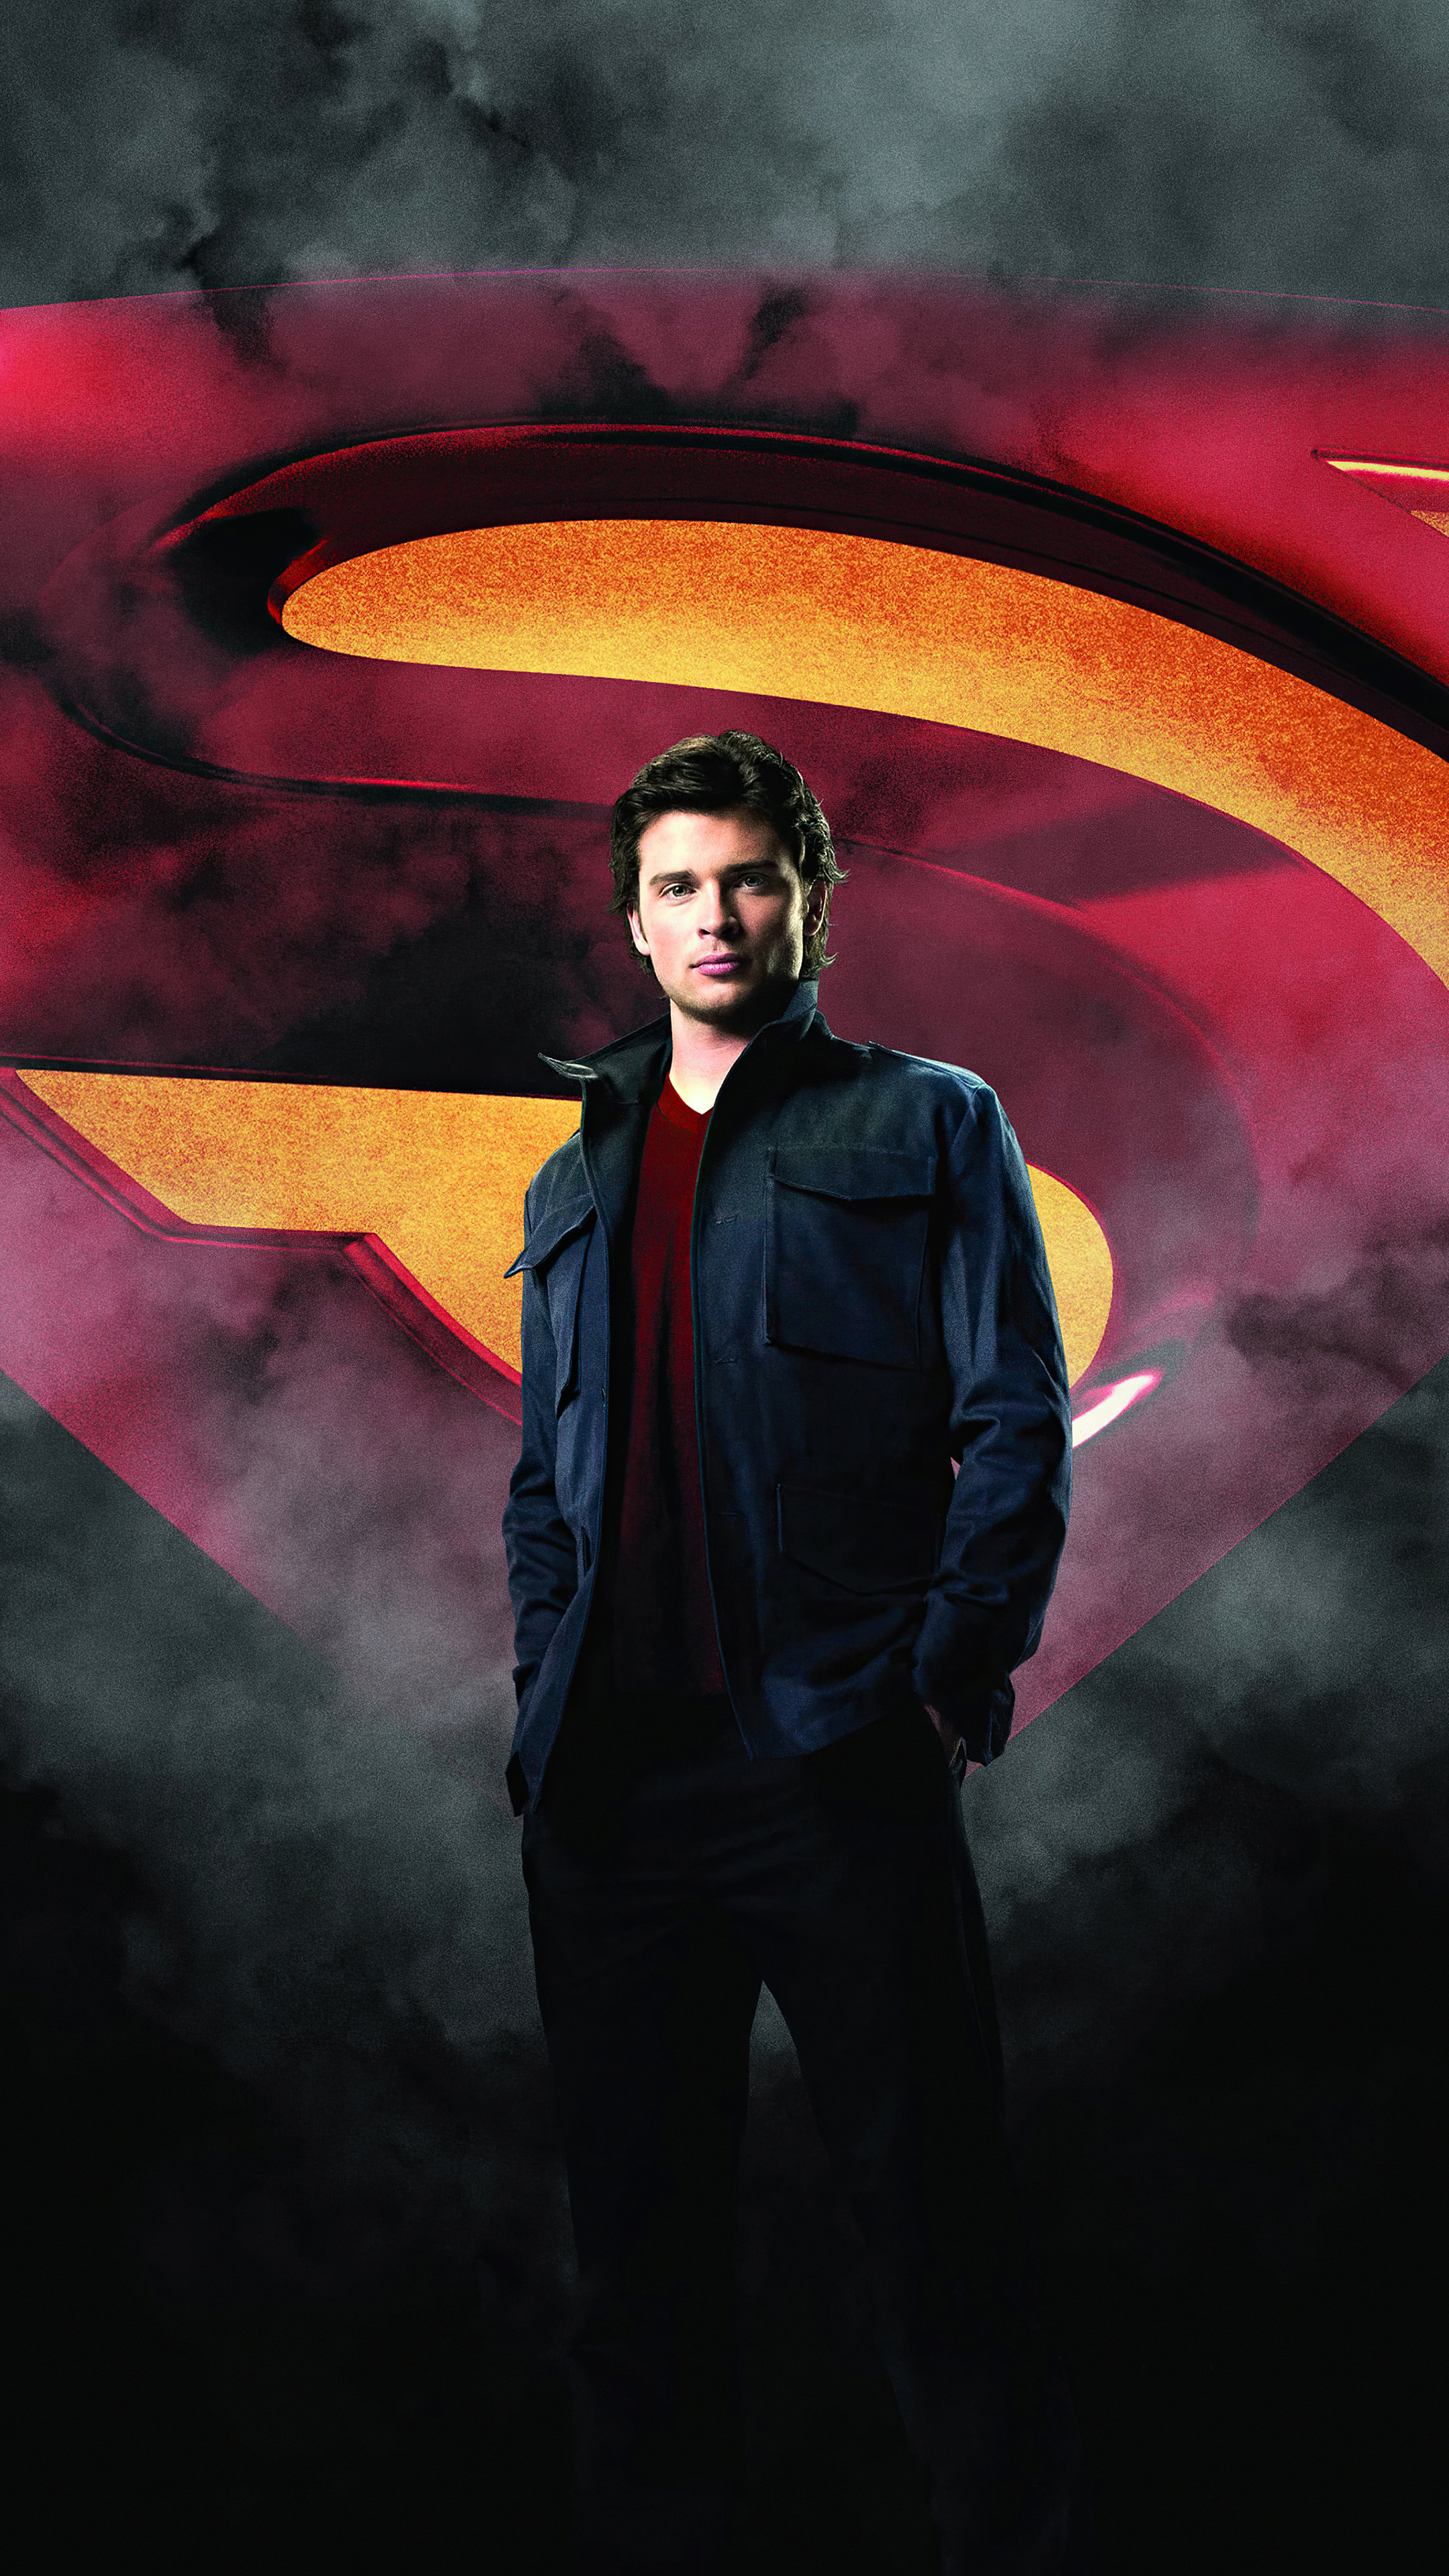 Smallville (TV Series): Superman, The Earth's greatest hero, A super-powered alien raised in Kansas. 2160x3840 4K Wallpaper.